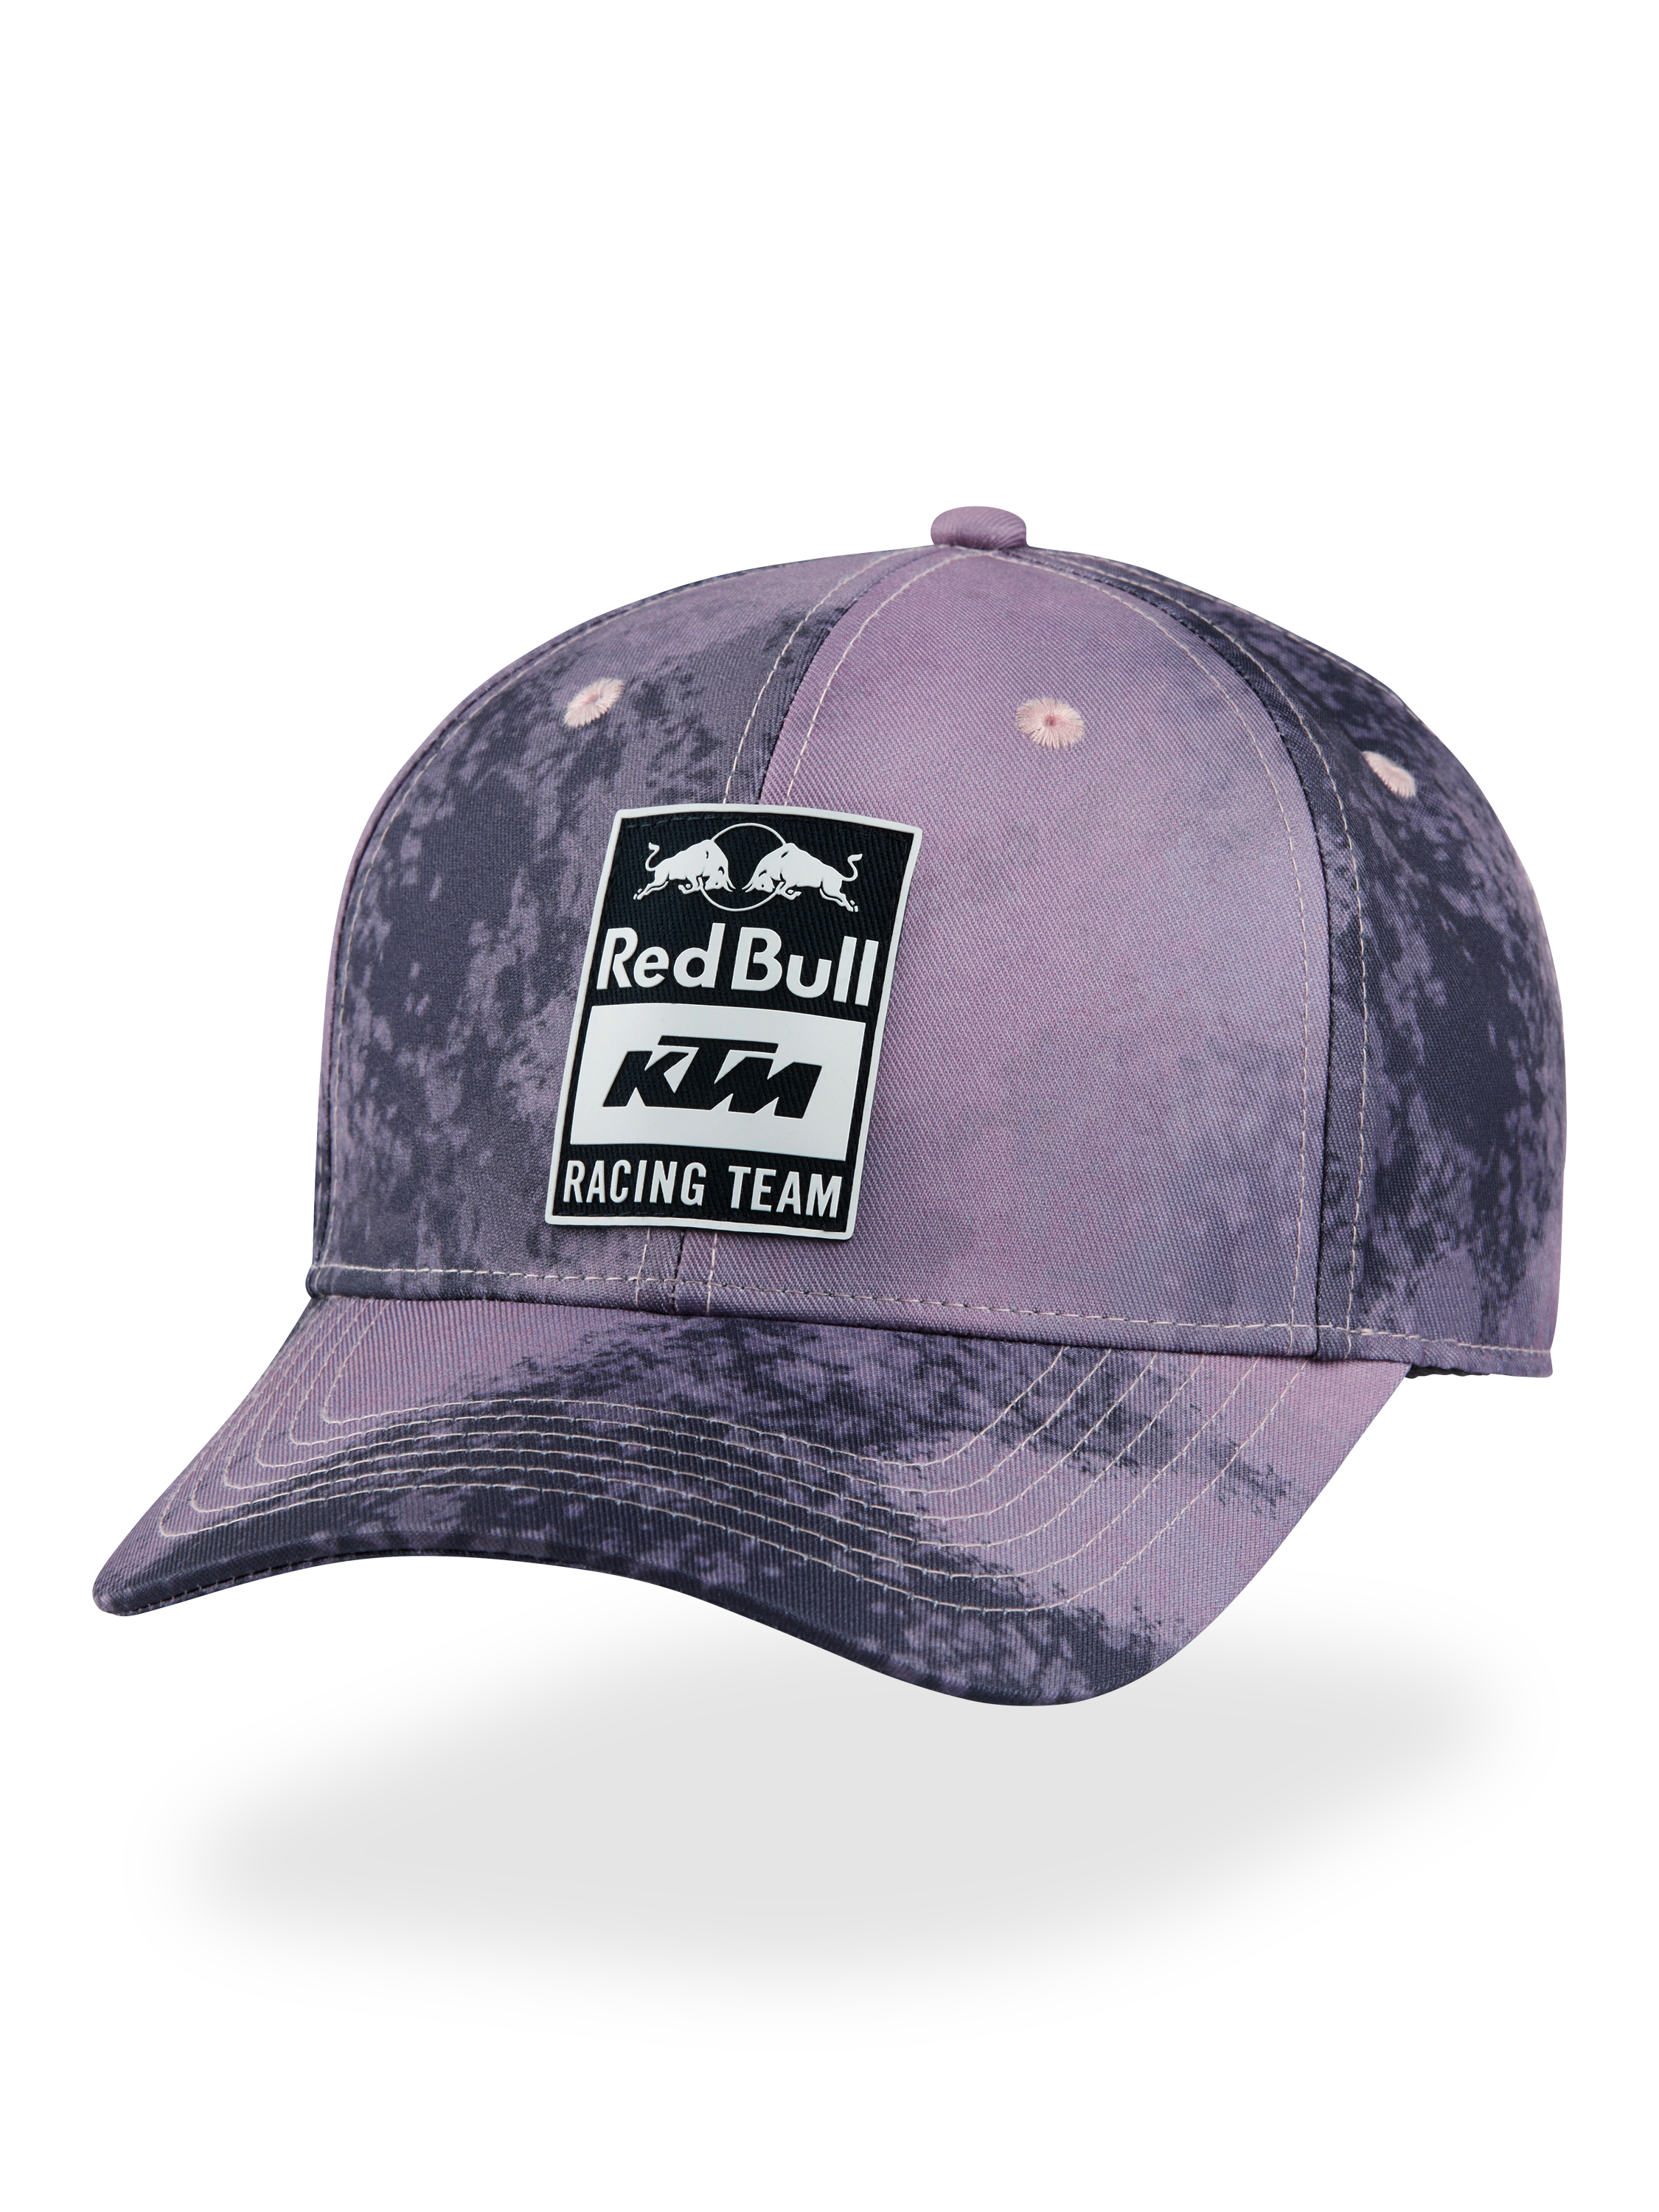 Gift Guide Shop: Red Bull KTM Racing Team Sticker Set